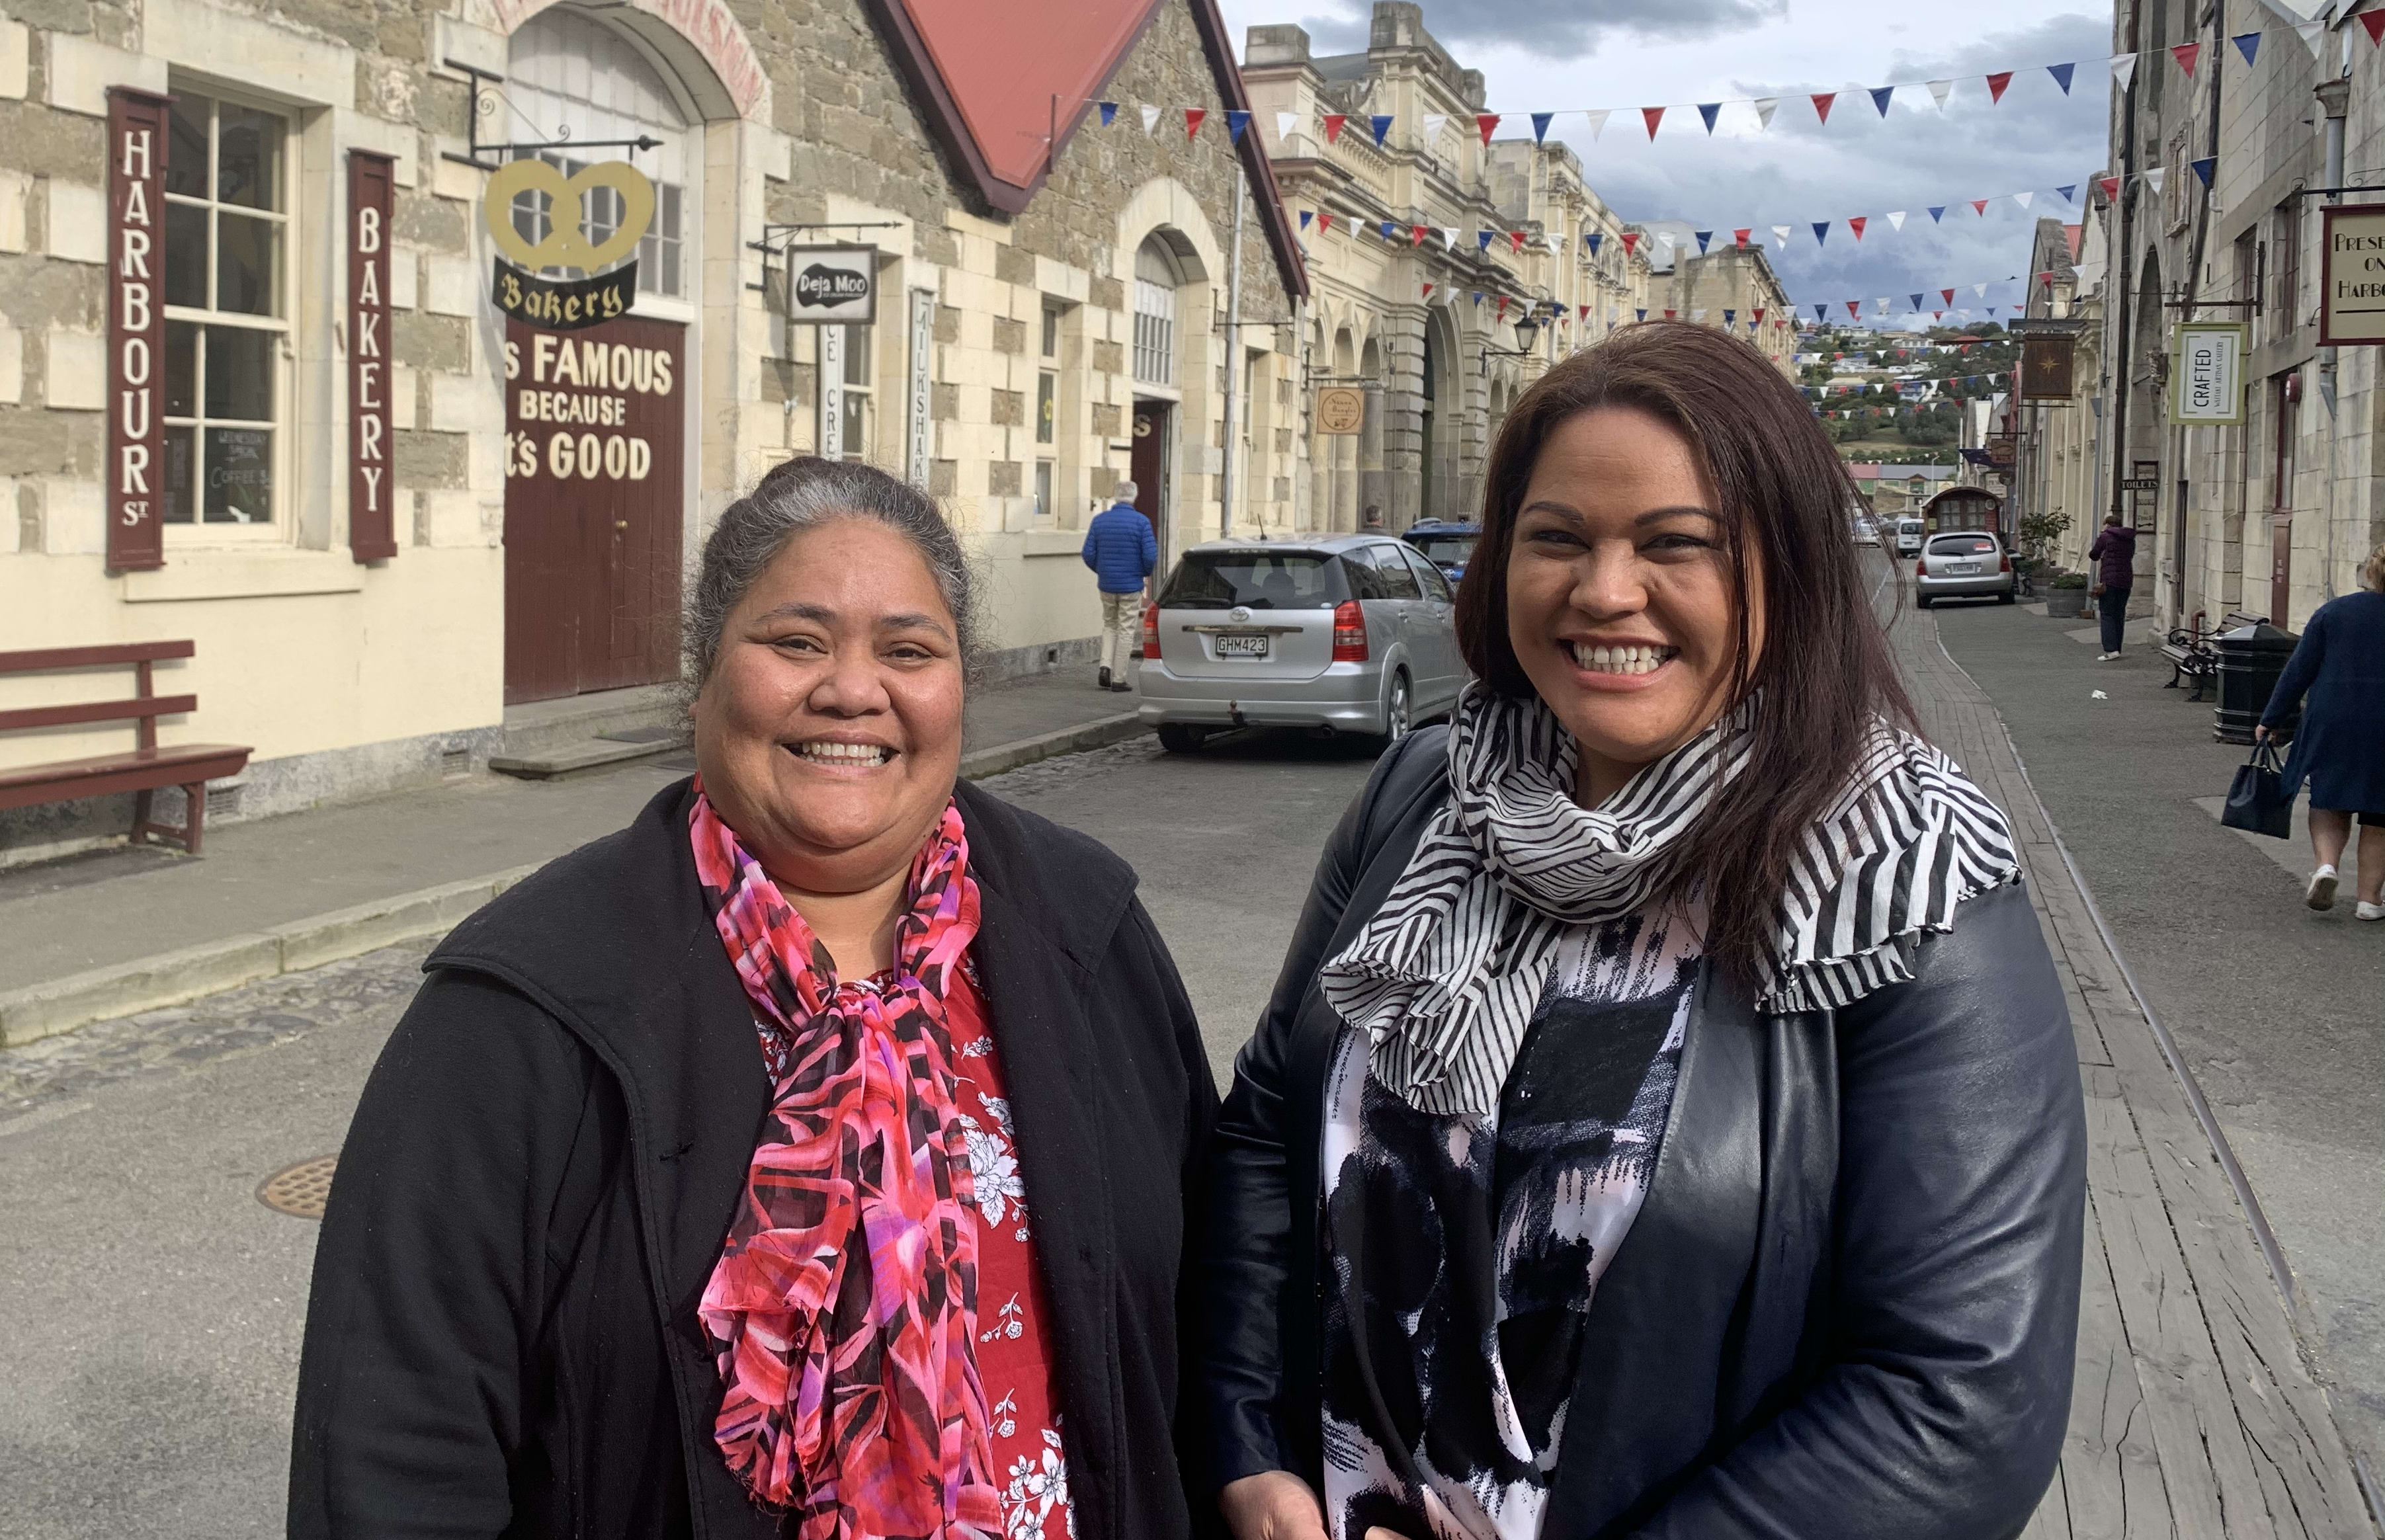 Silou Temoana and Hana Halalele (L-R) in Oamaru's historic Victorian precinct.